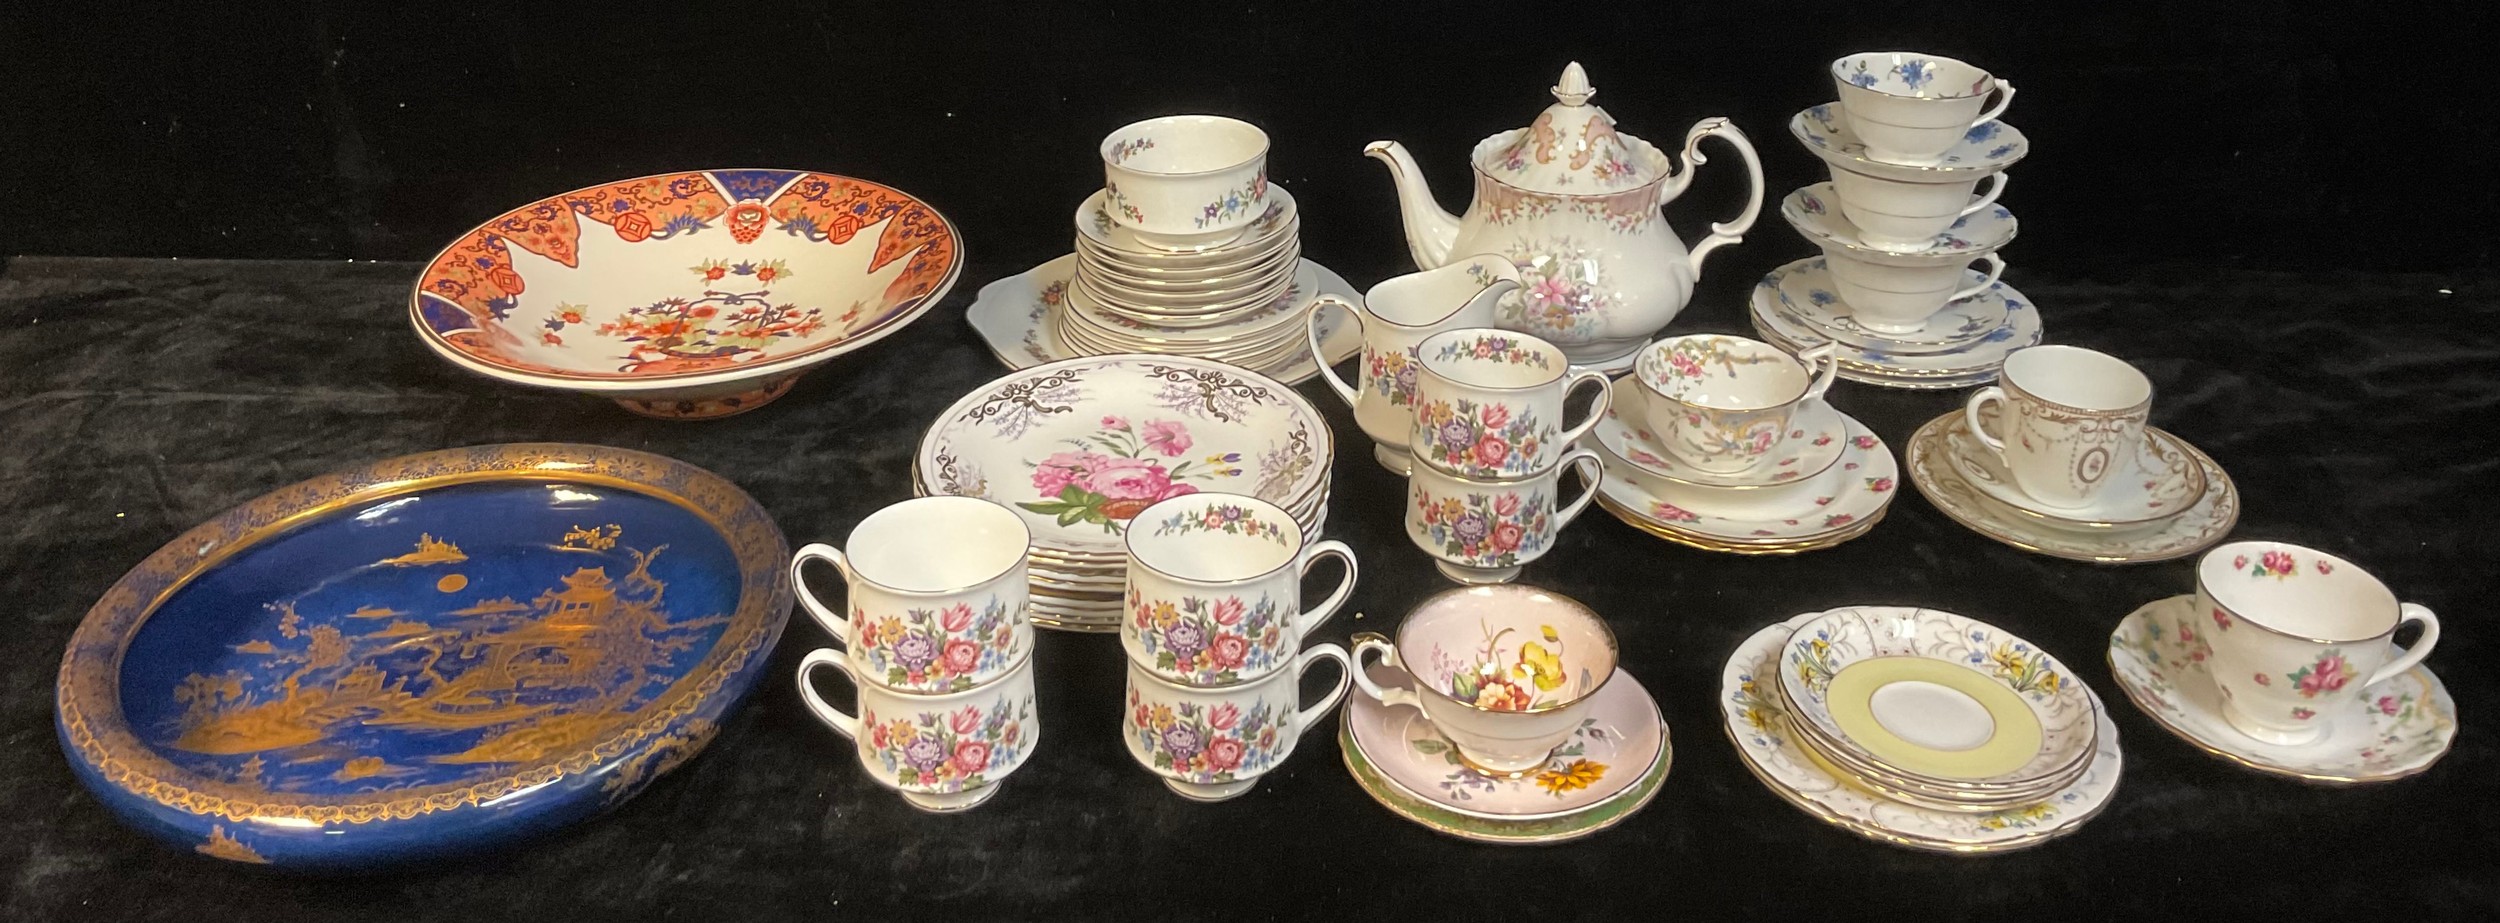 A Paragon Lavinia pattern tea service for six; a Royal Albert Serenity pattern teapot; a Shelley